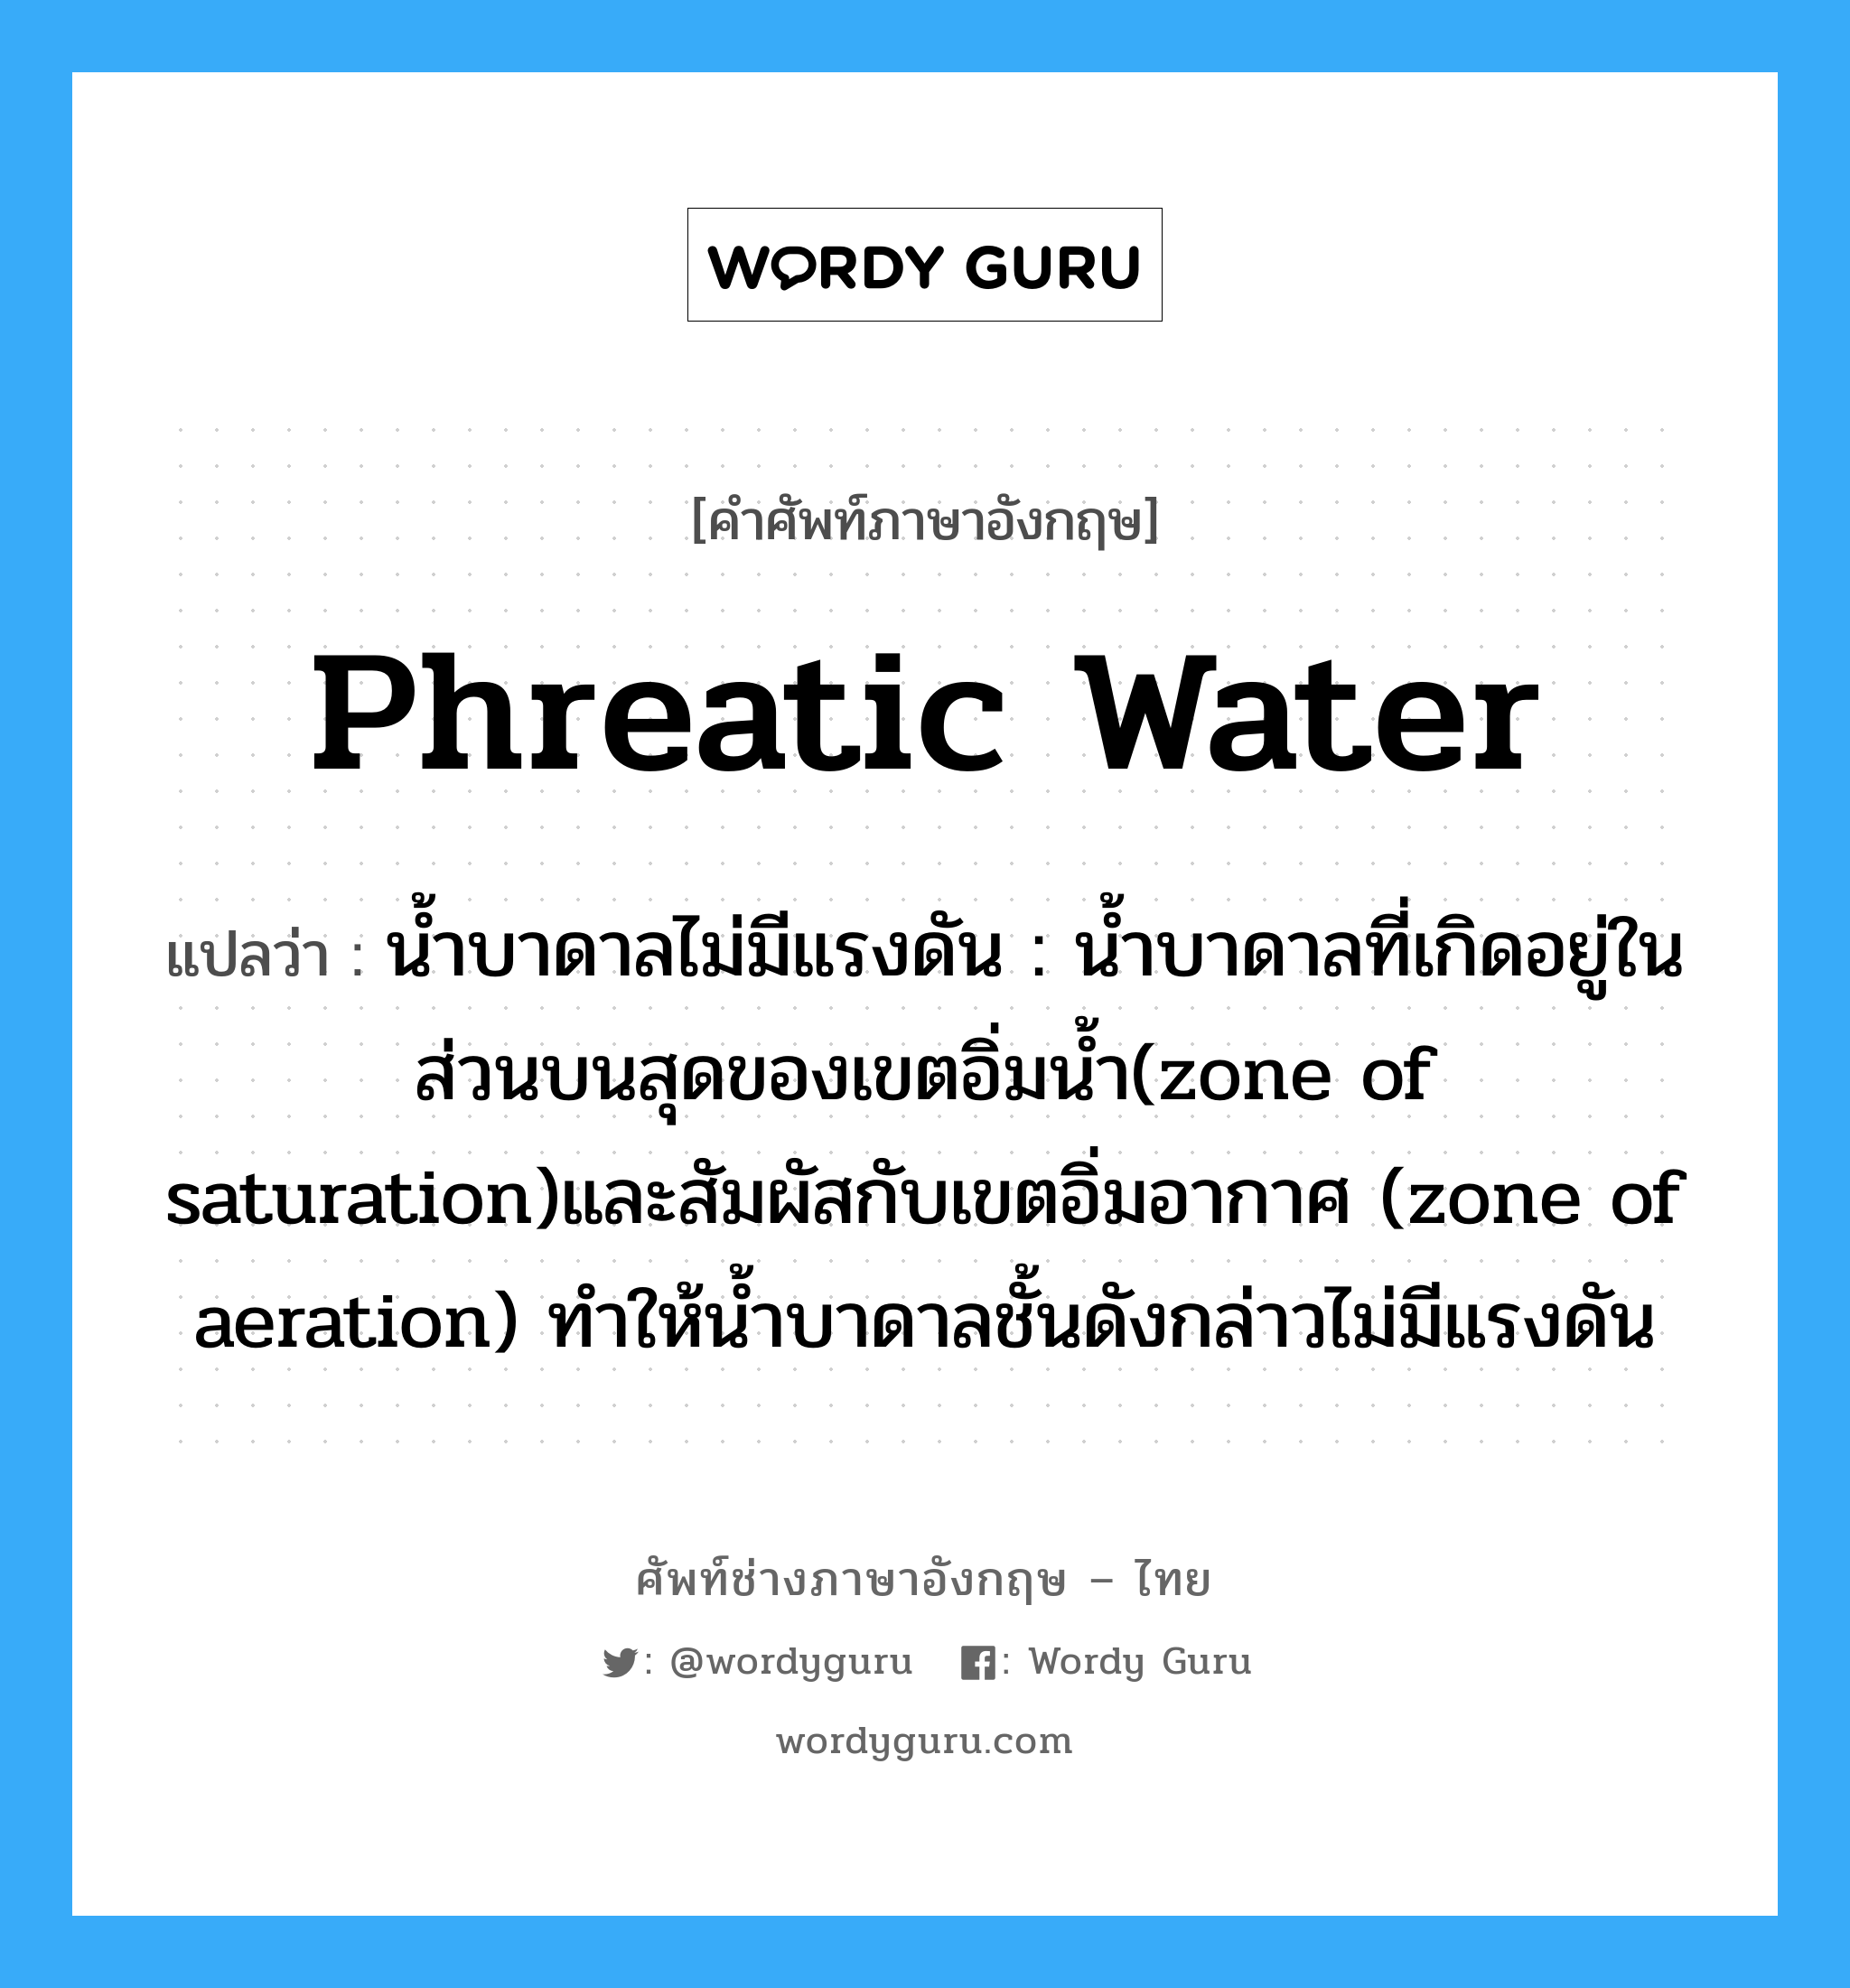 phreatic water แปลว่า?, คำศัพท์ช่างภาษาอังกฤษ - ไทย phreatic water คำศัพท์ภาษาอังกฤษ phreatic water แปลว่า น้ำบาดาลไม่มีแรงดัน : น้ำบาดาลที่เกิดอยู่ในส่วนบนสุดของเขตอิ่มน้ำ(zone of saturation)และสัมผัสกับเขตอิ่มอากาศ (zone of aeration) ทำให้น้ำบาดาลชั้นดังกล่าวไม่มีแรงดัน